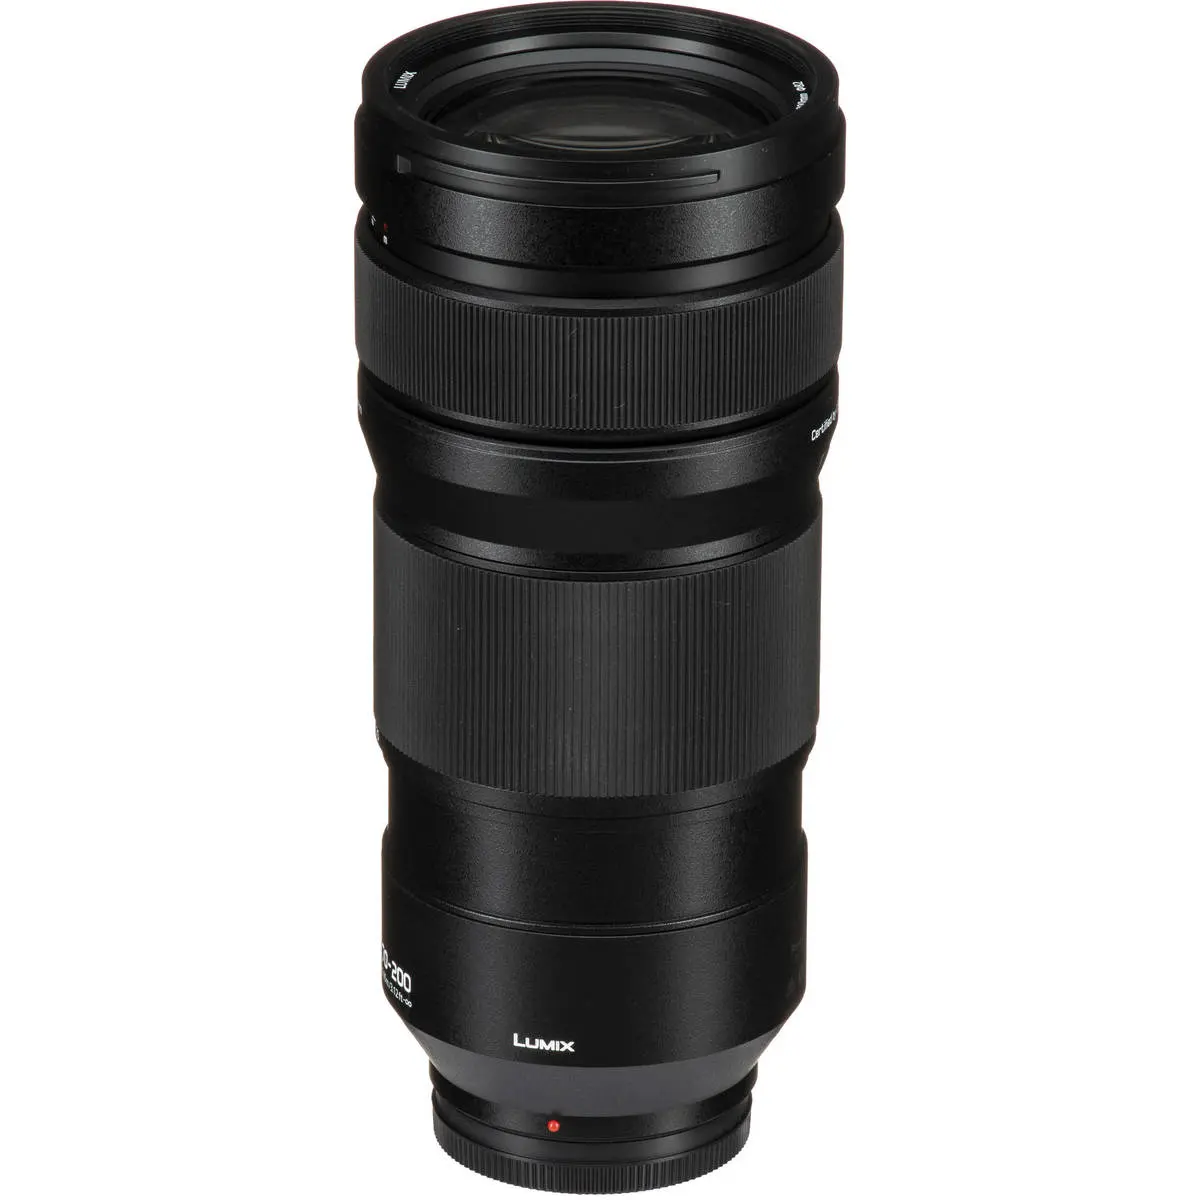 3. Panasonic Lumix S Pro 70-200mm F2.8 O.I.S. Lens